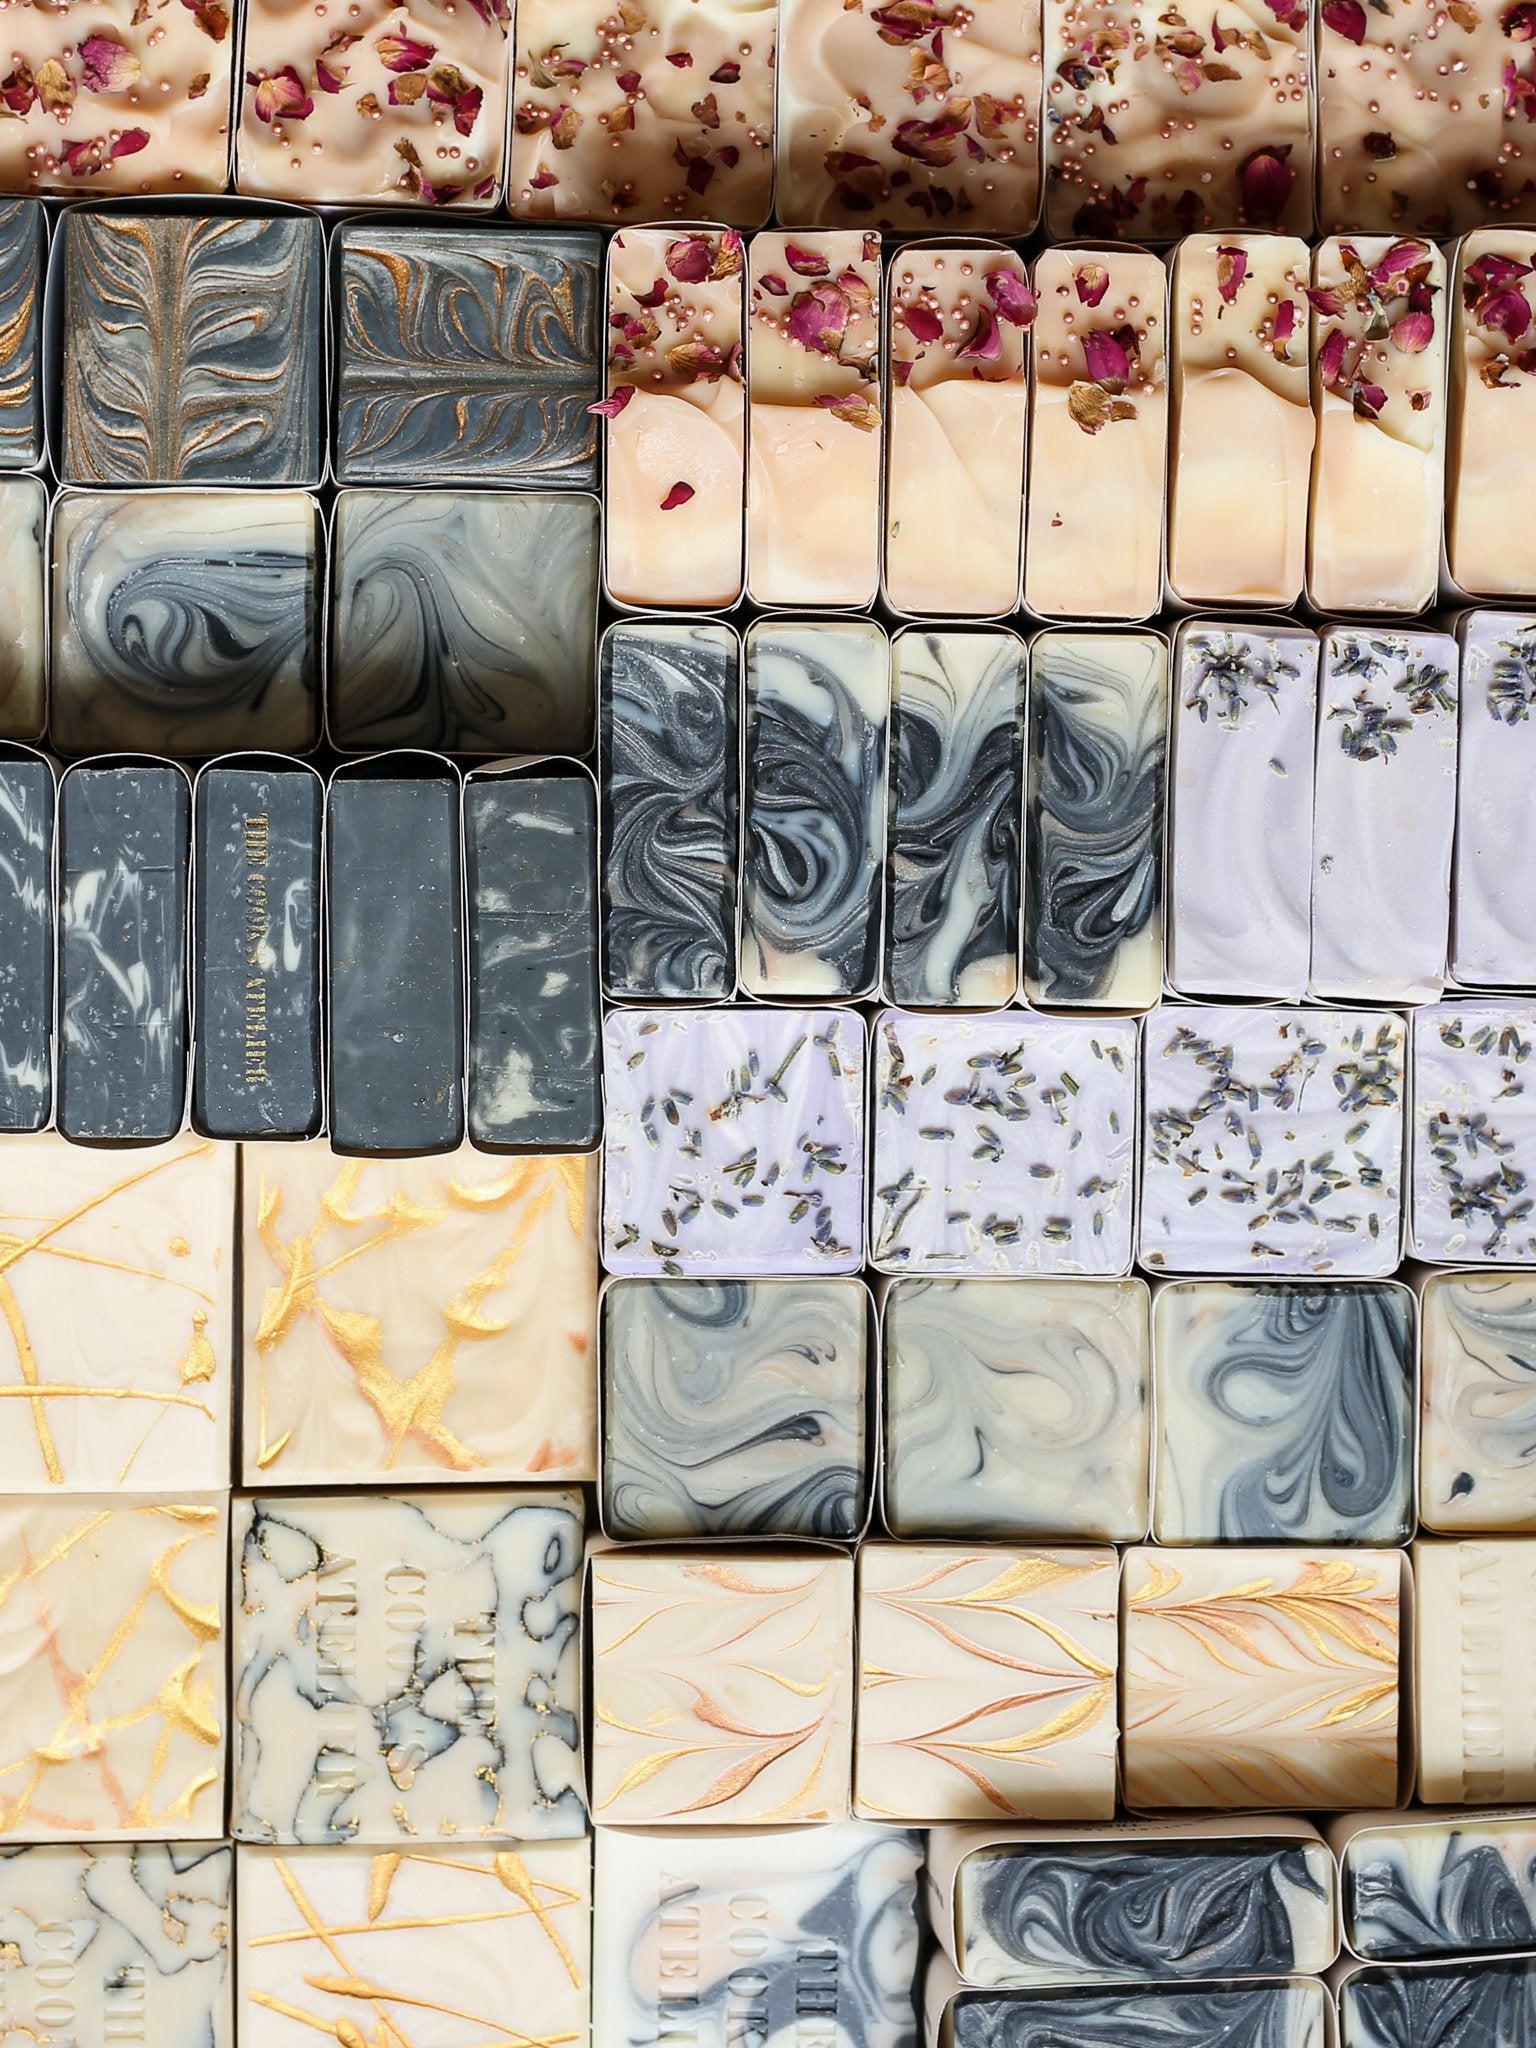 The Cook's Atelier Handmade Soap